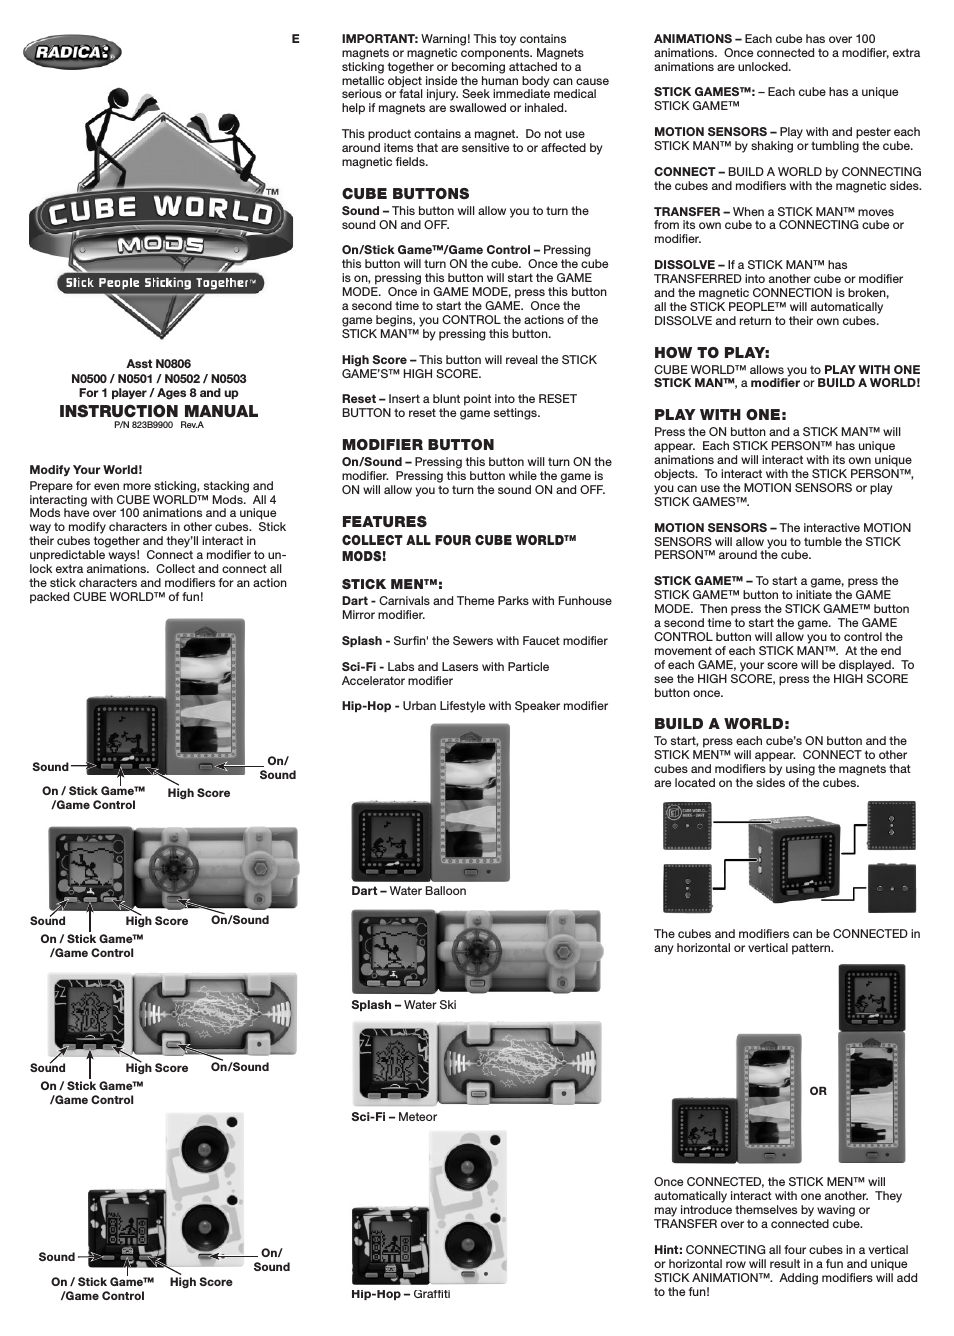 CUBE WORLD N0503